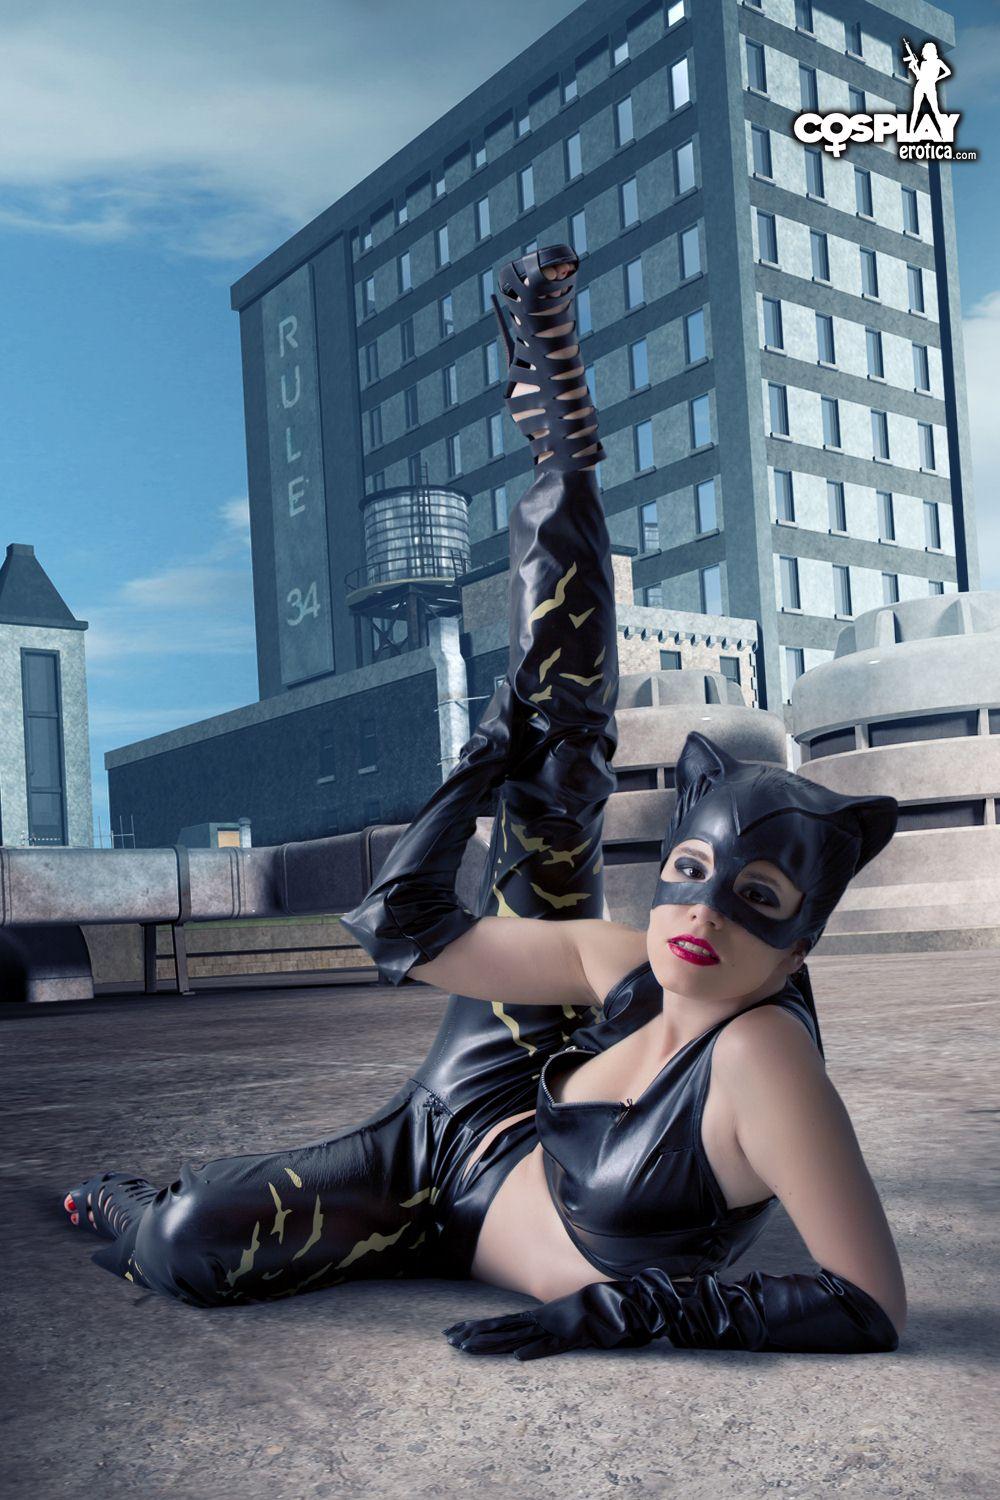 Sexy cosplayer cassie si veste come catwoman
 #53704388